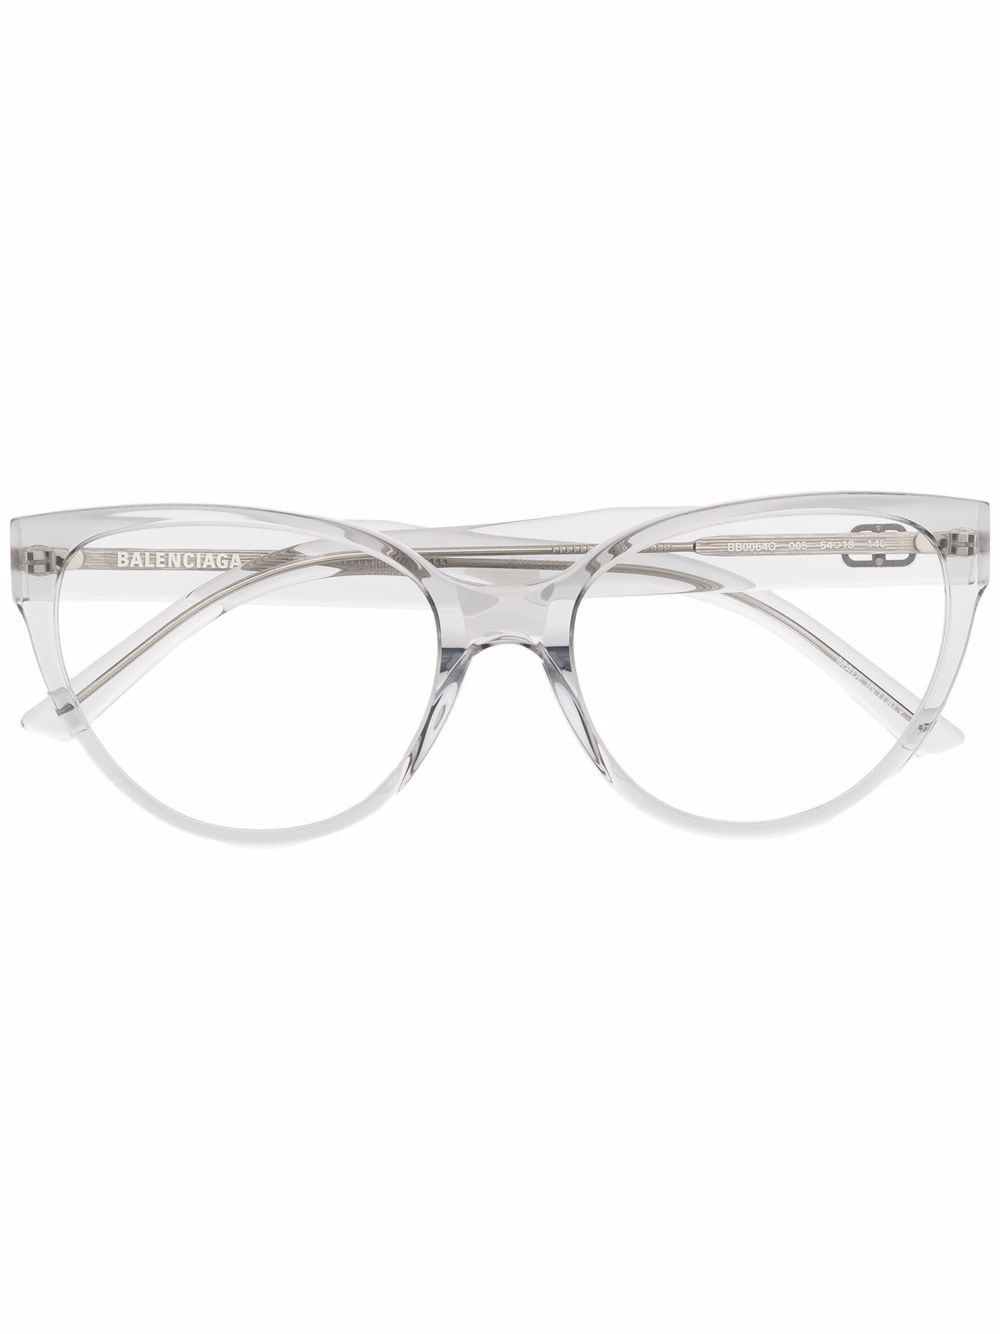 фото Balenciaga eyewear очки в прозрачной оправе